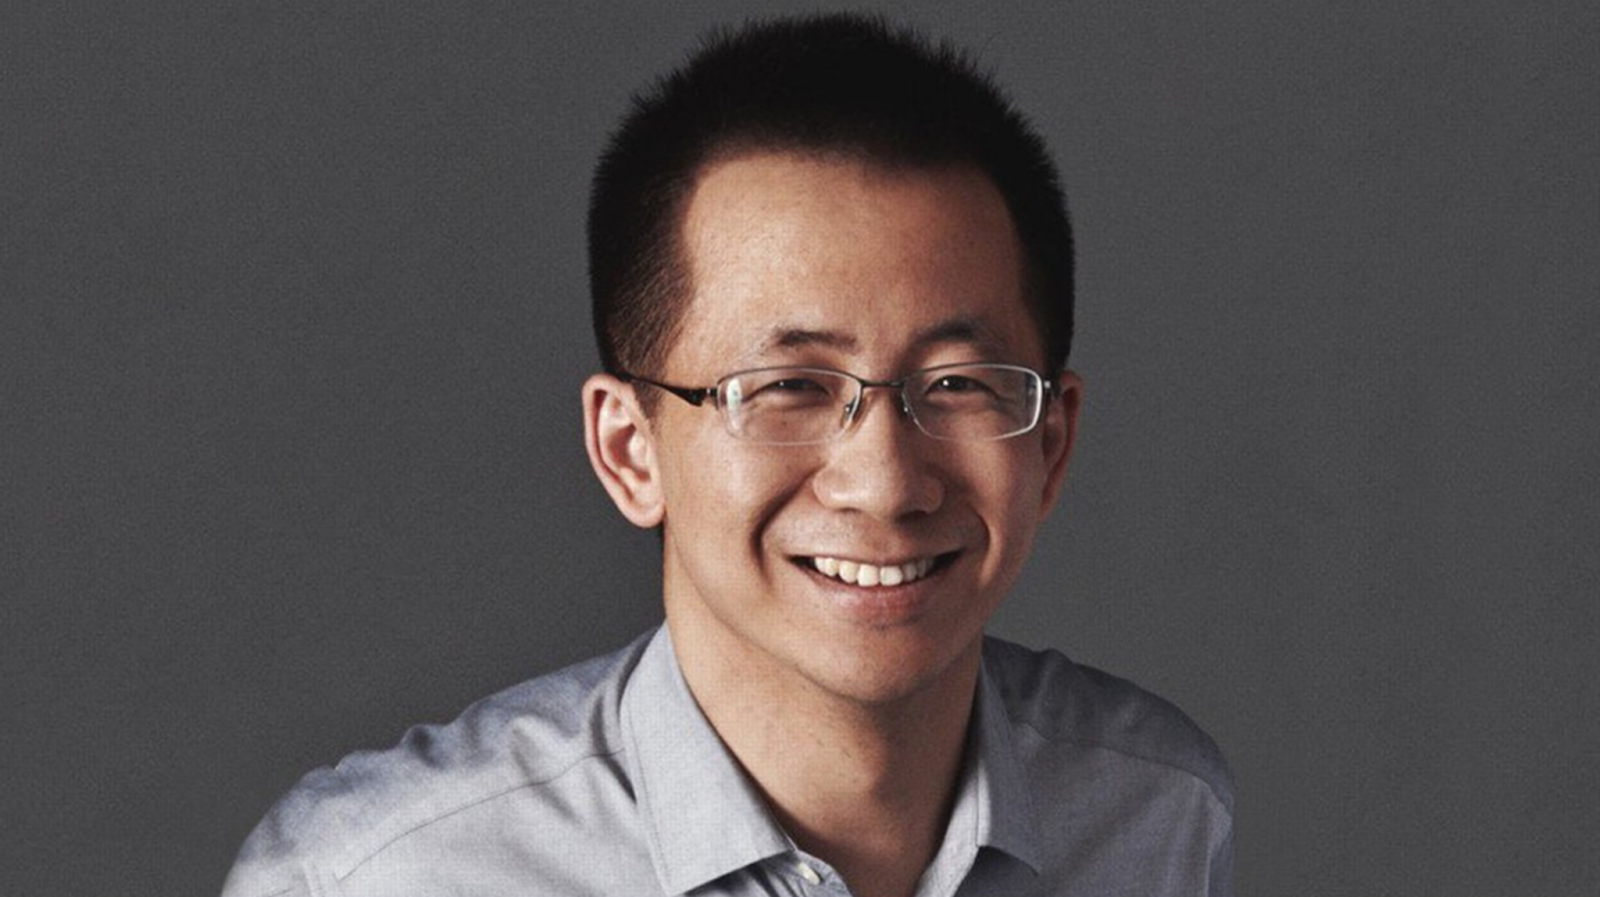 Zhang Yiming - Is An Internet Entrepreneur